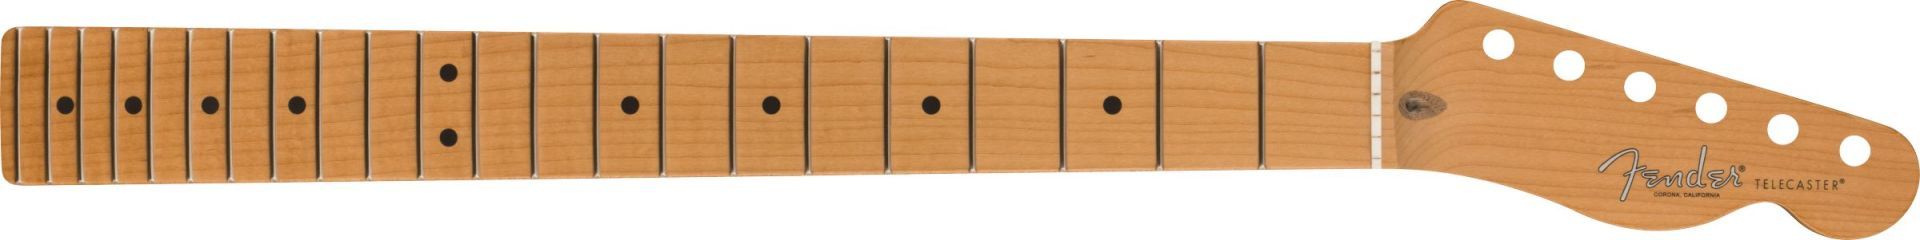 Fender American Pro II Tele Neck 22 Narrow Tall Frets 9.5 Roasted Maple